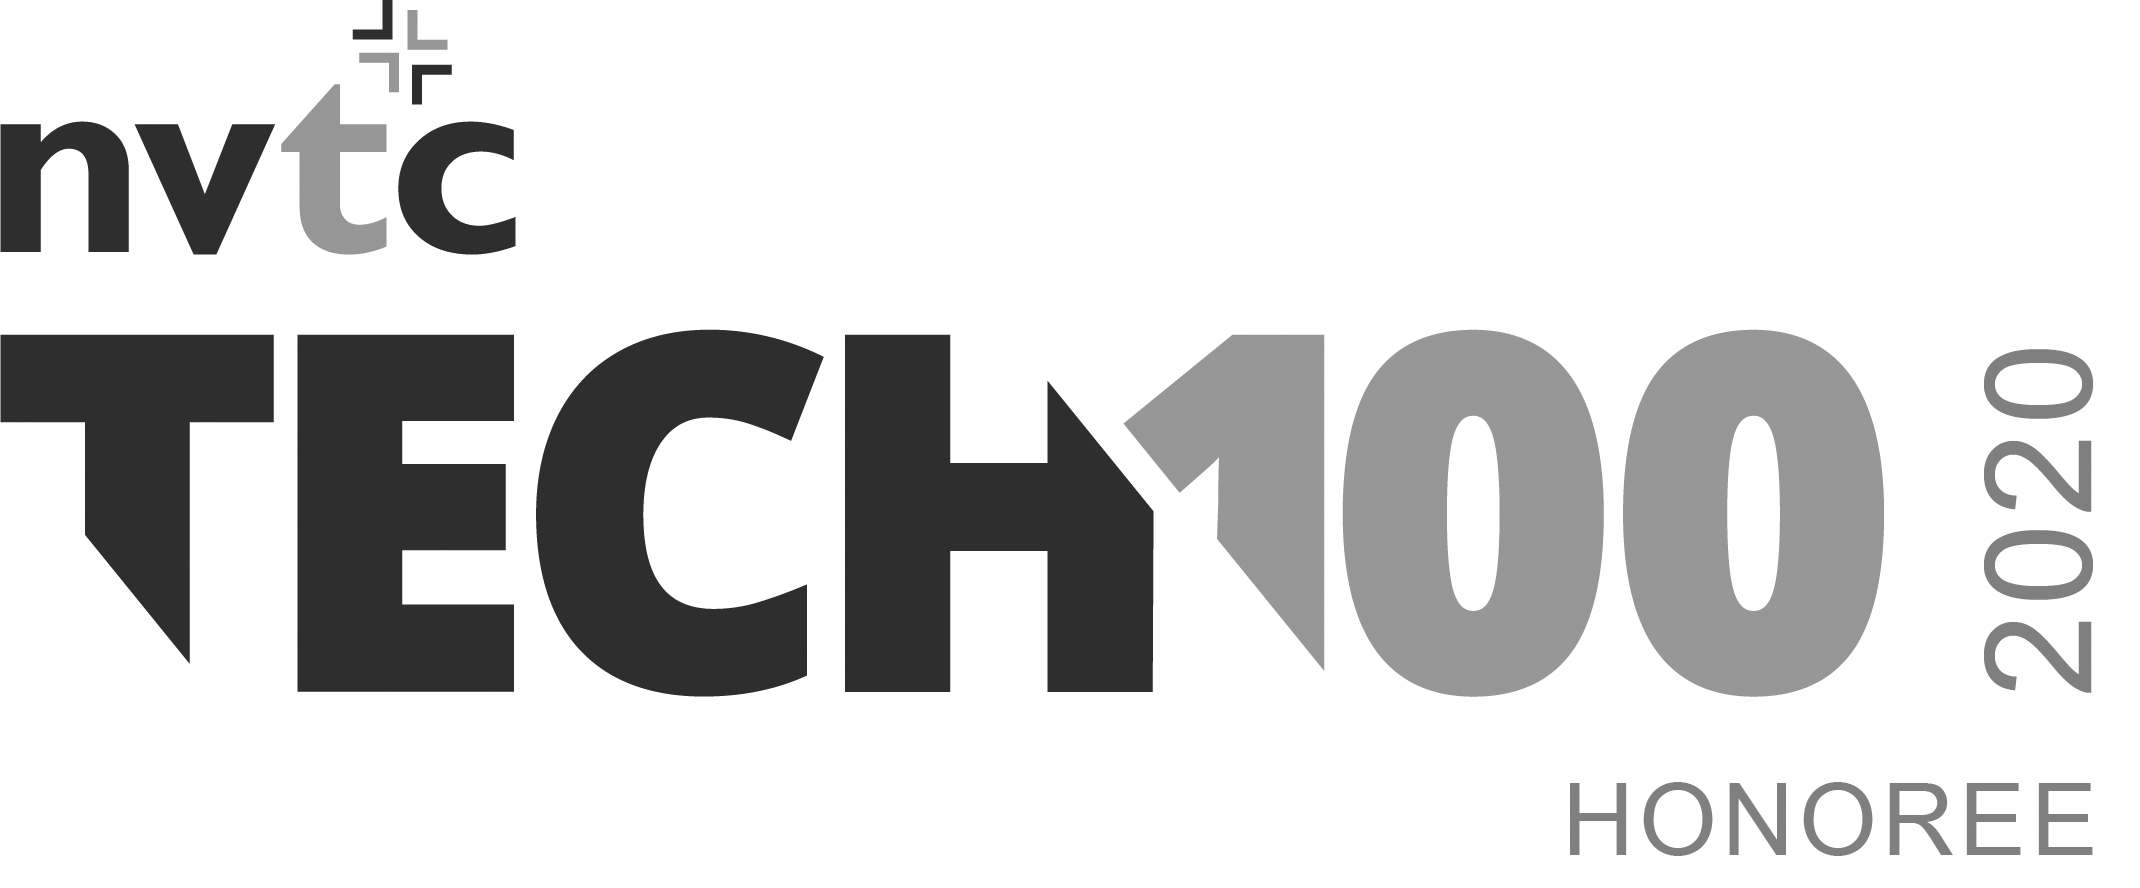 nvtc tech 100 honoree